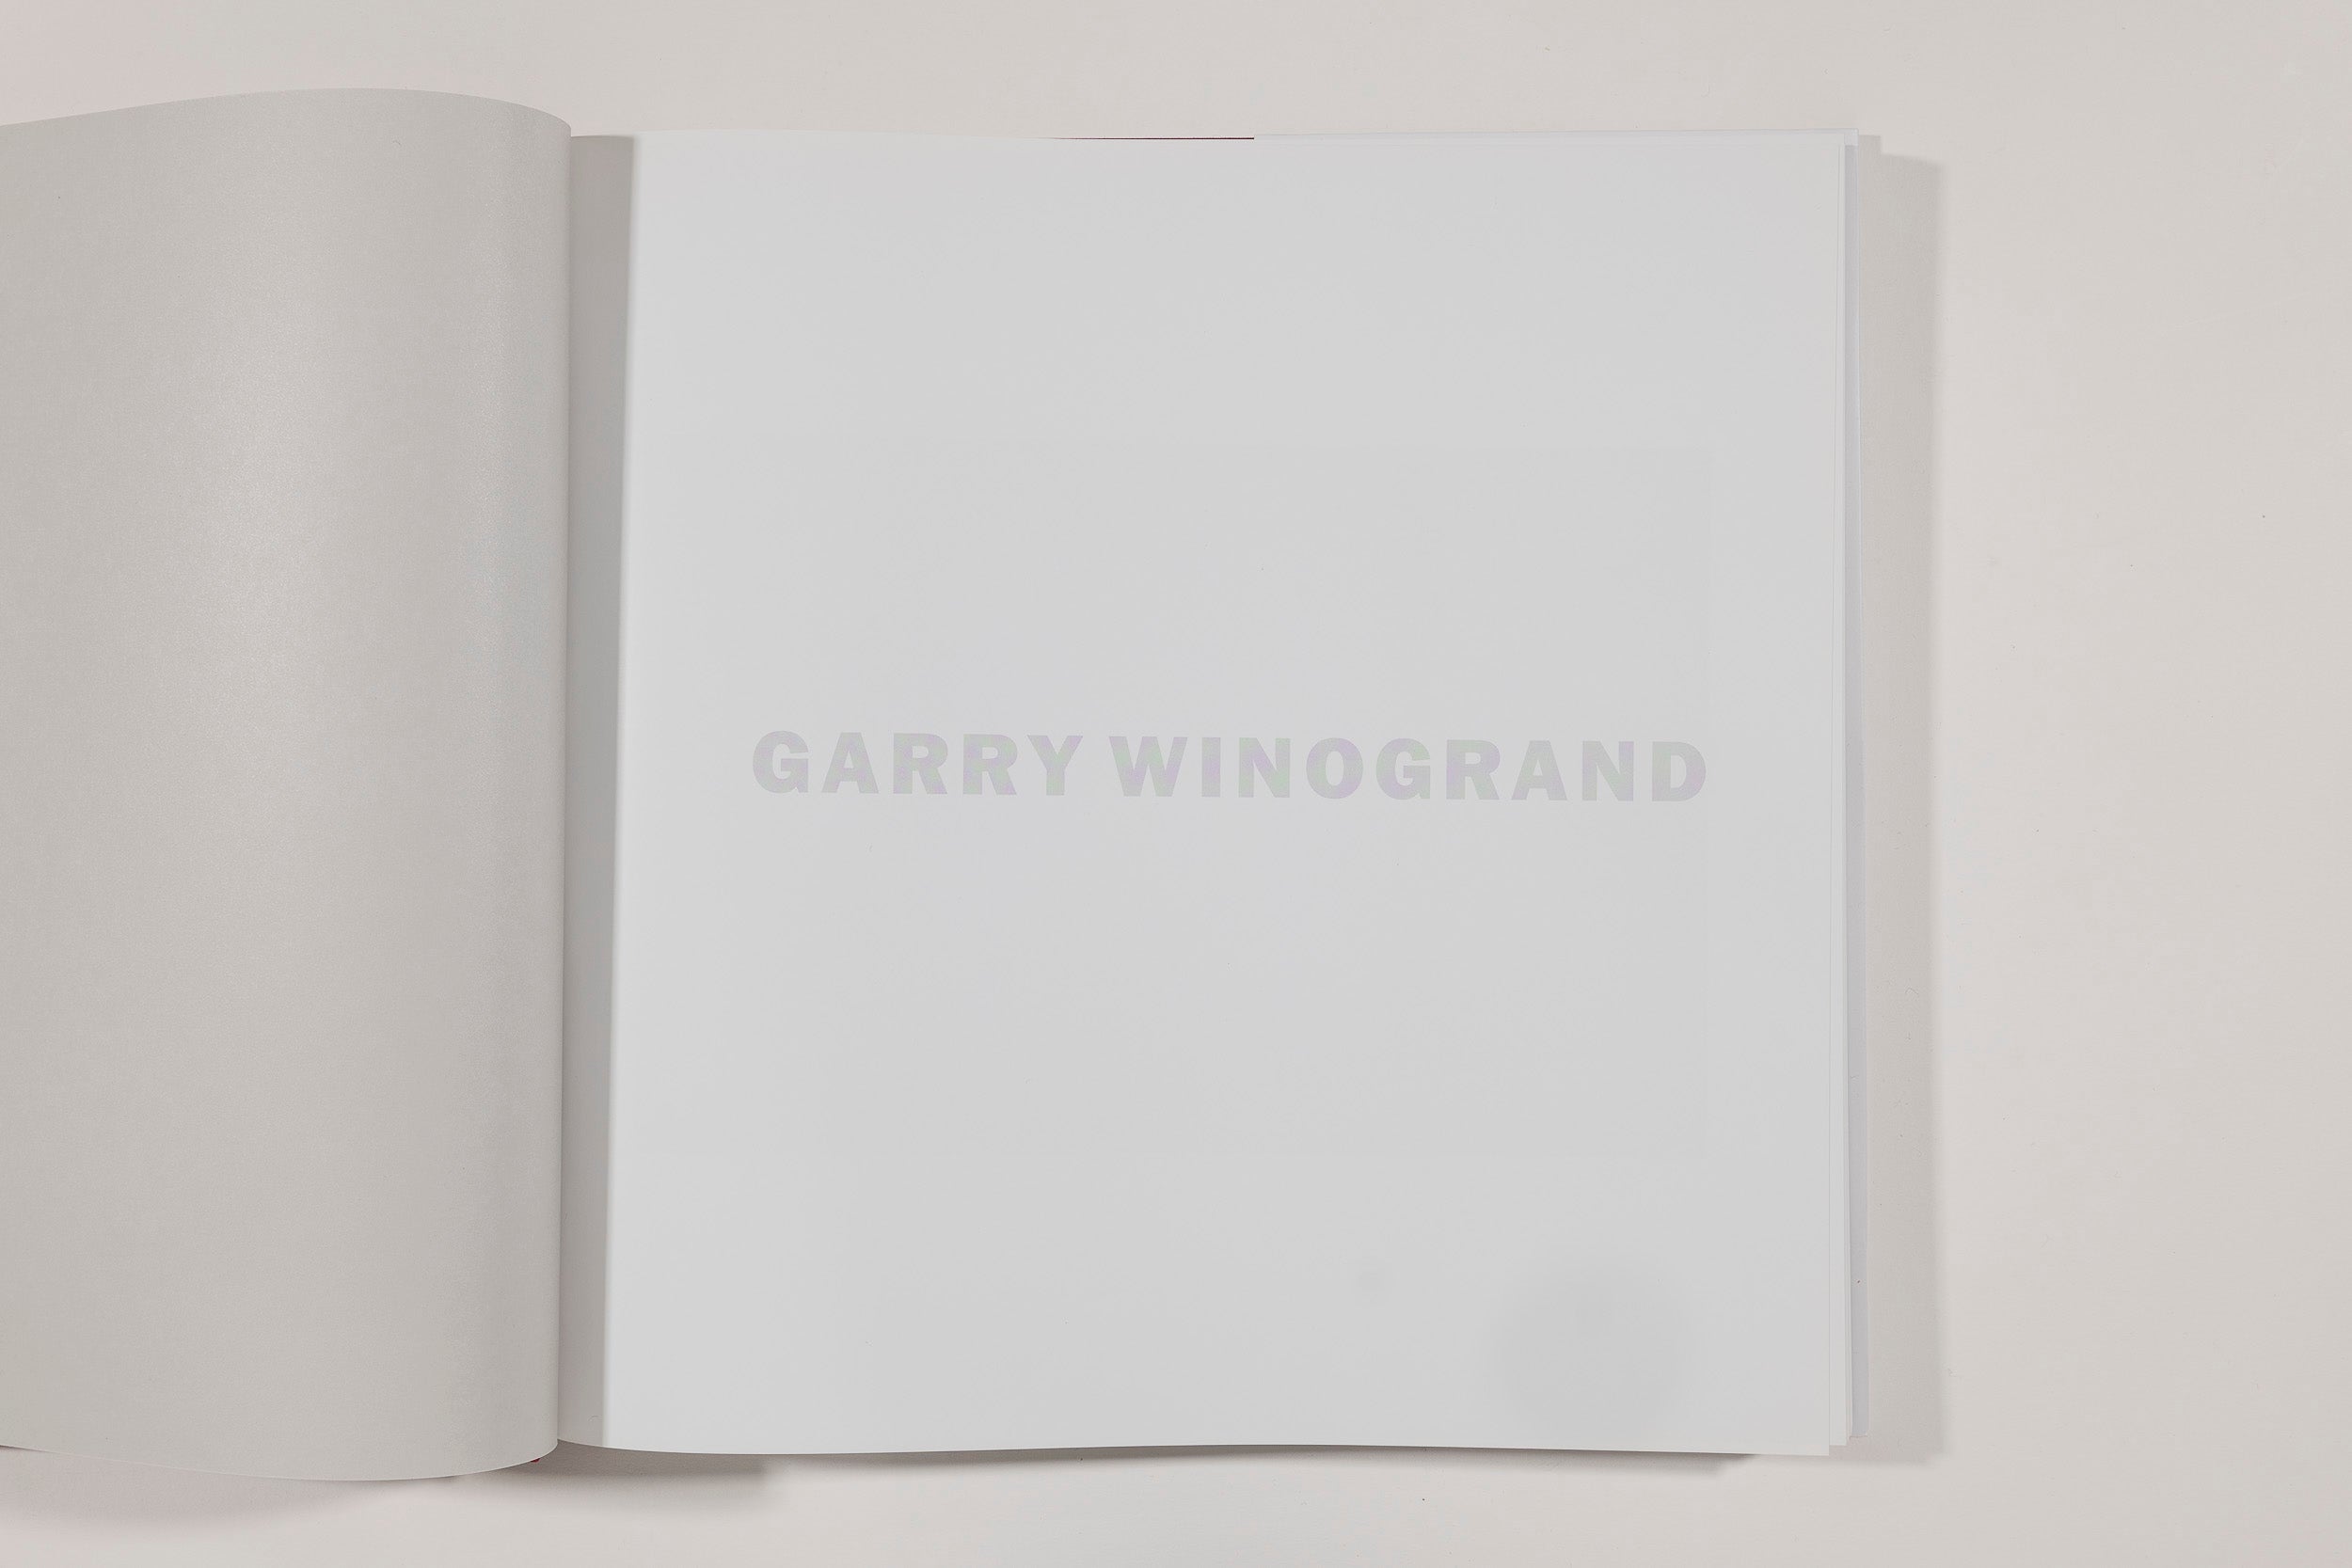 Winogrand Color - Garry Winogrand